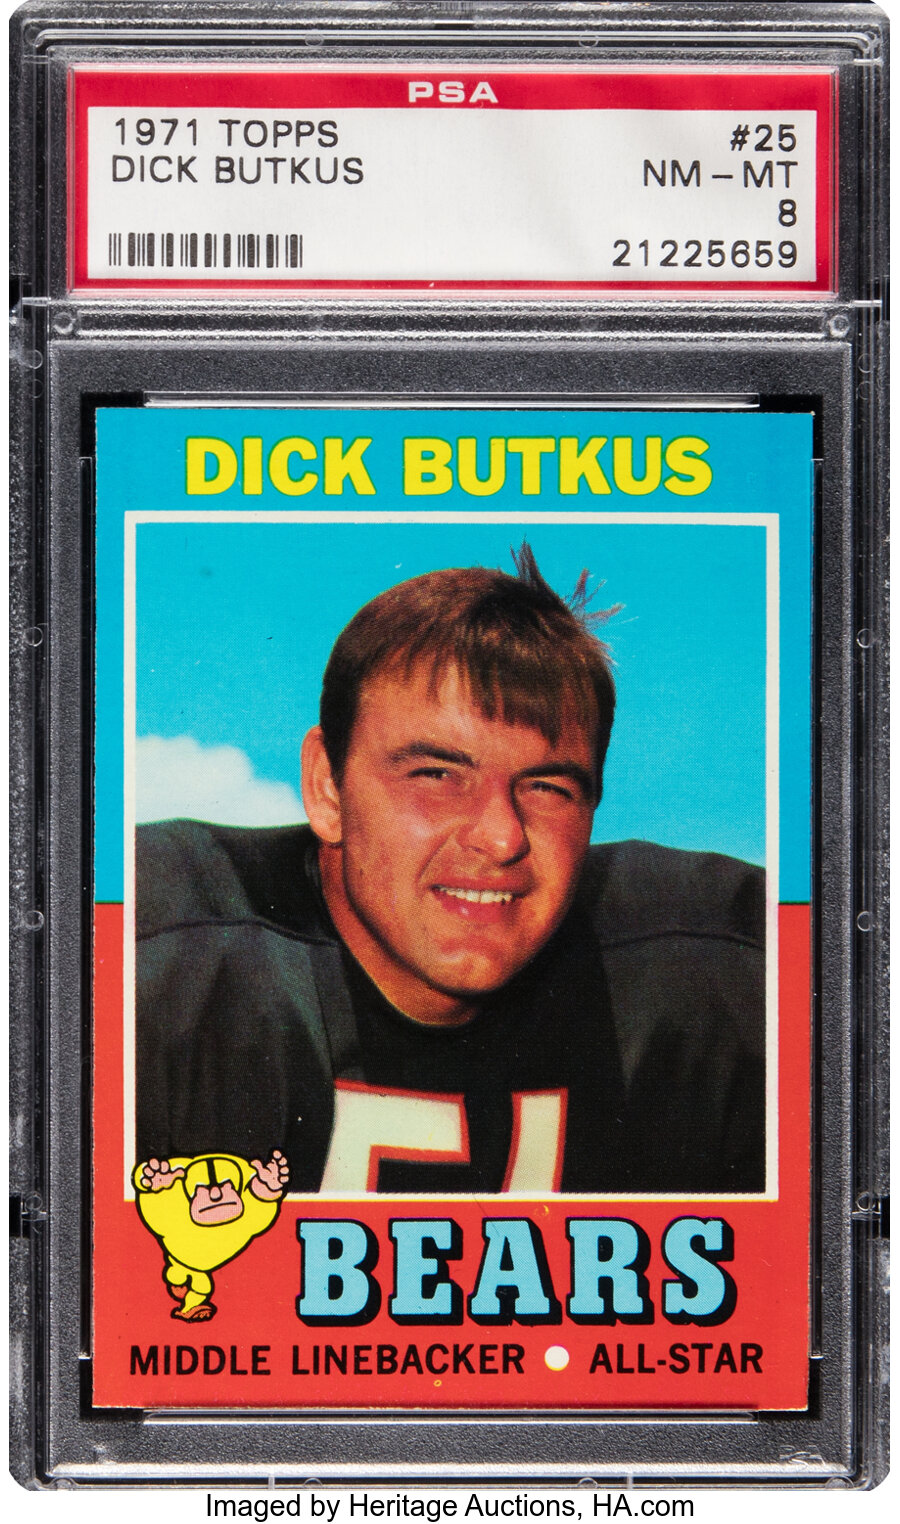 1971 Topps Dick Butkus #25 PSA NM-MT 8